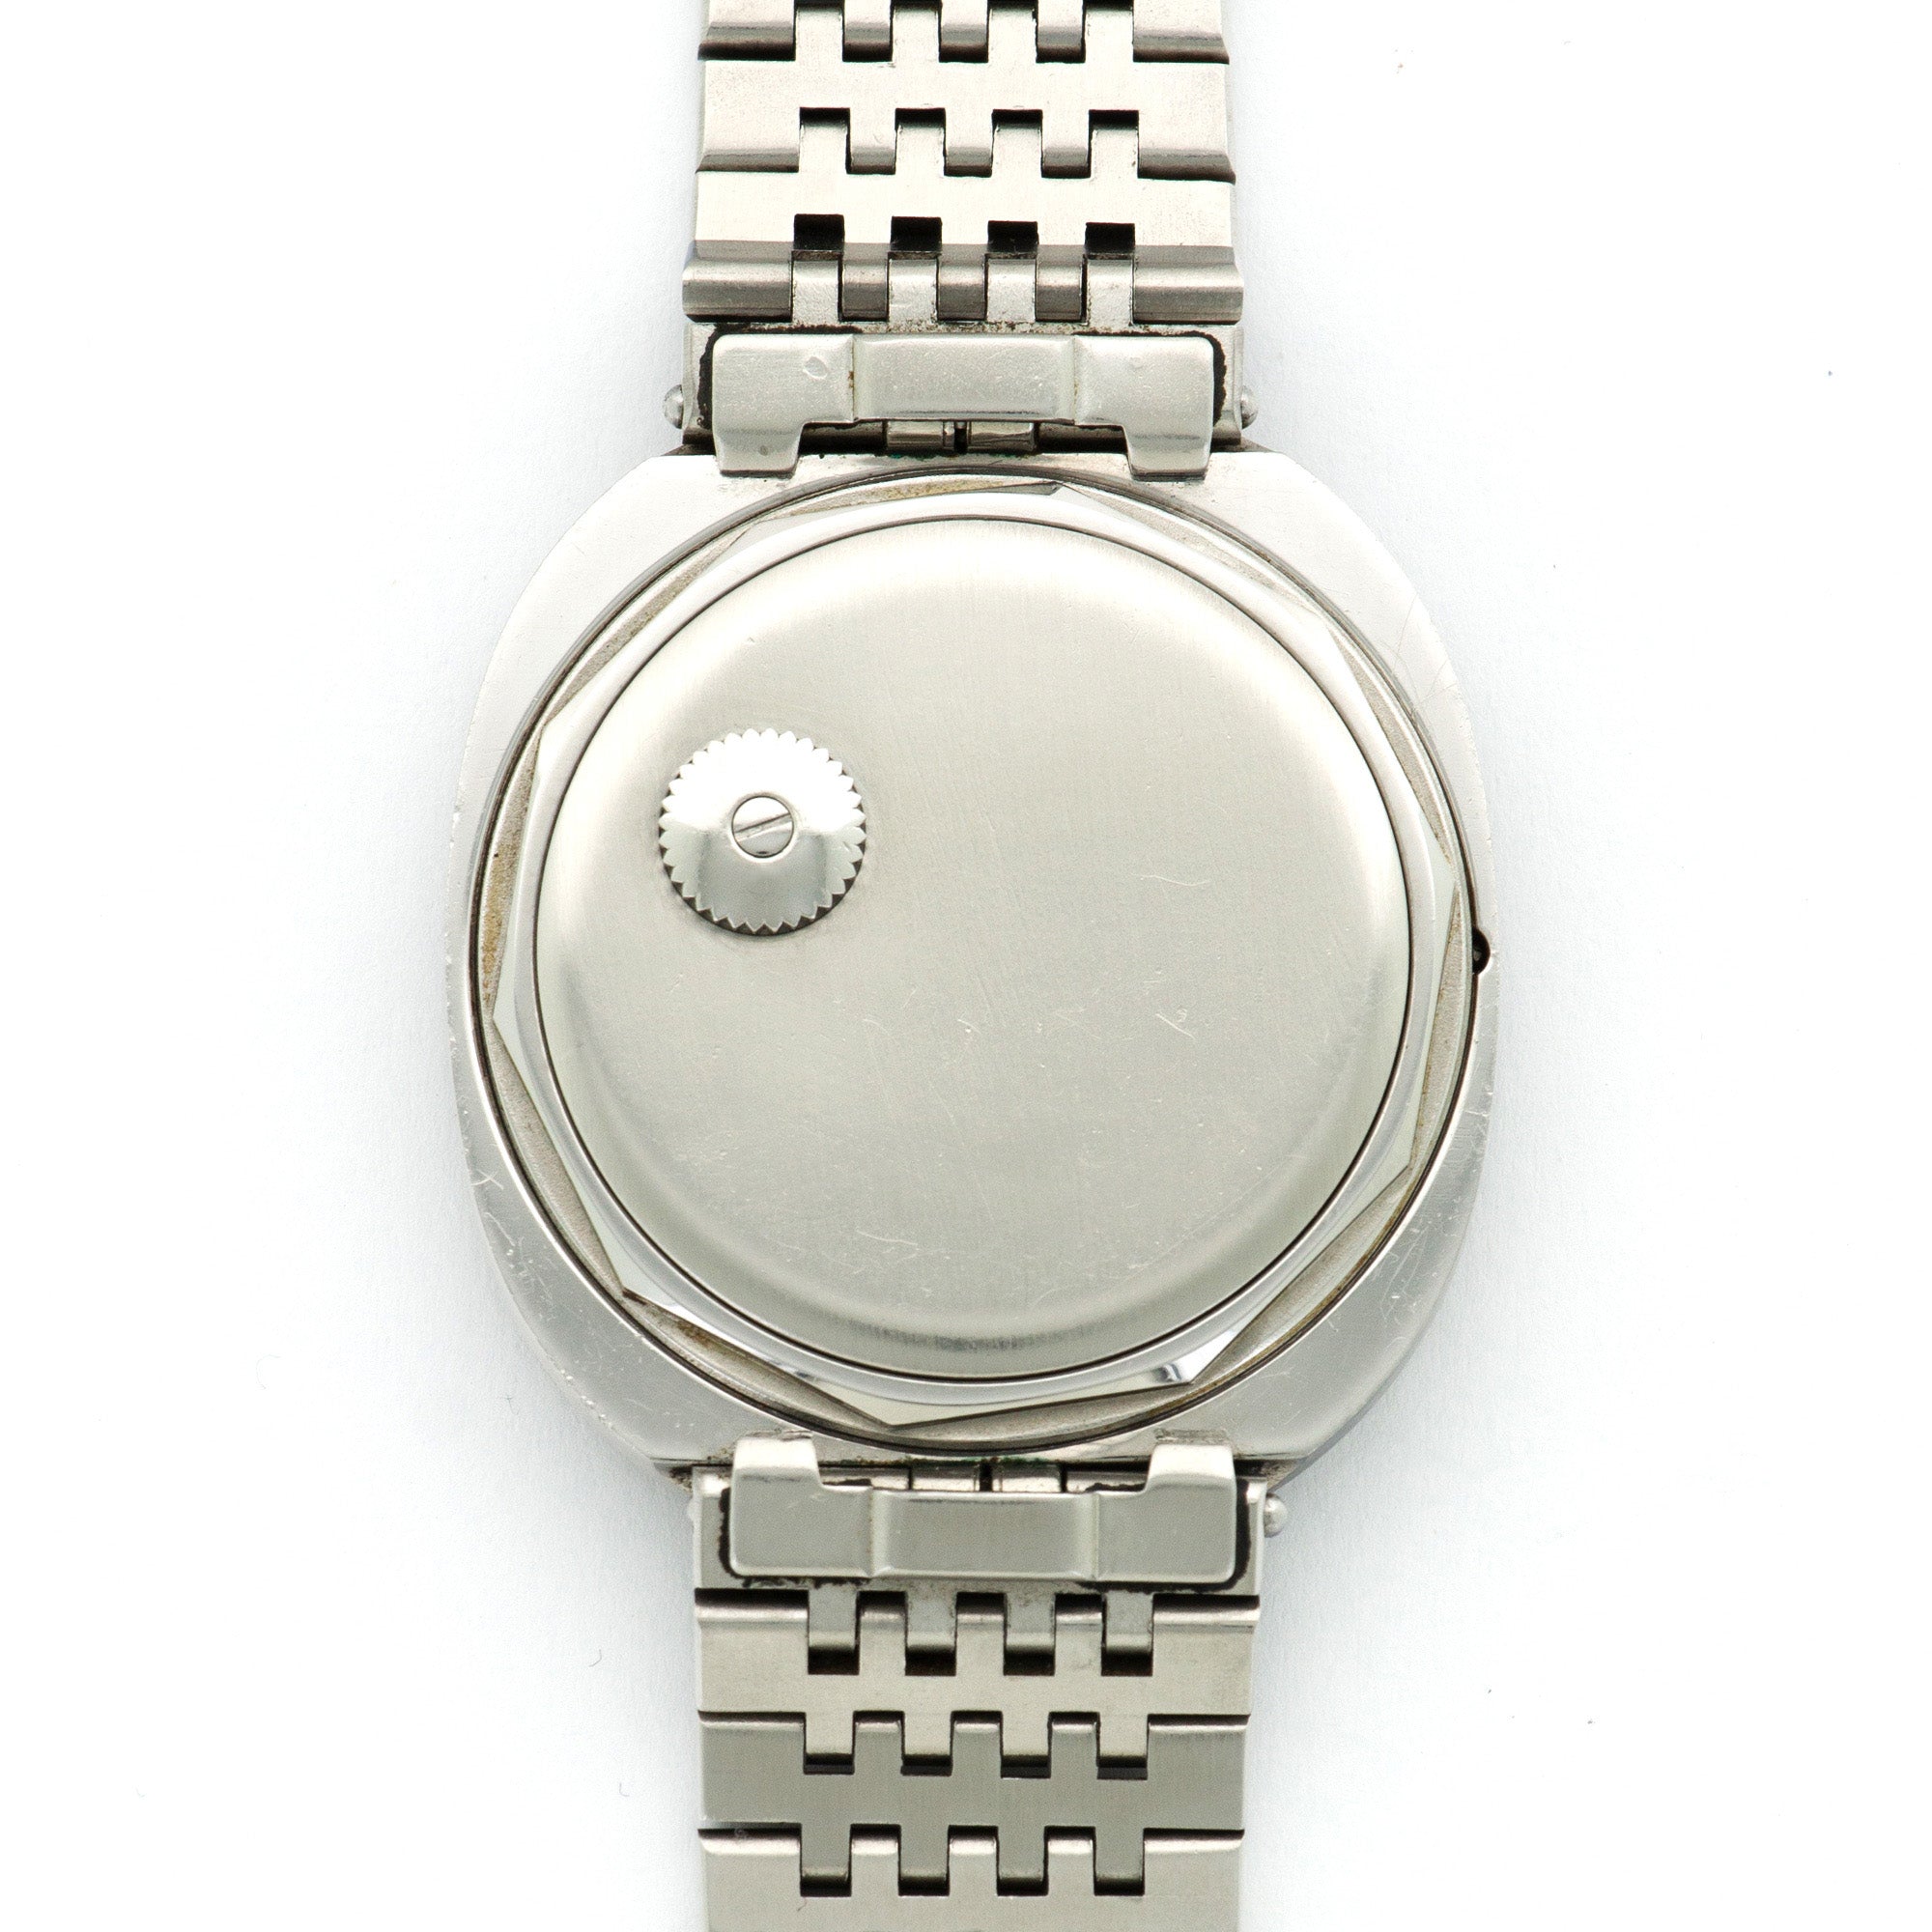 Patek Philippe Automatic Watch Ref. 3580